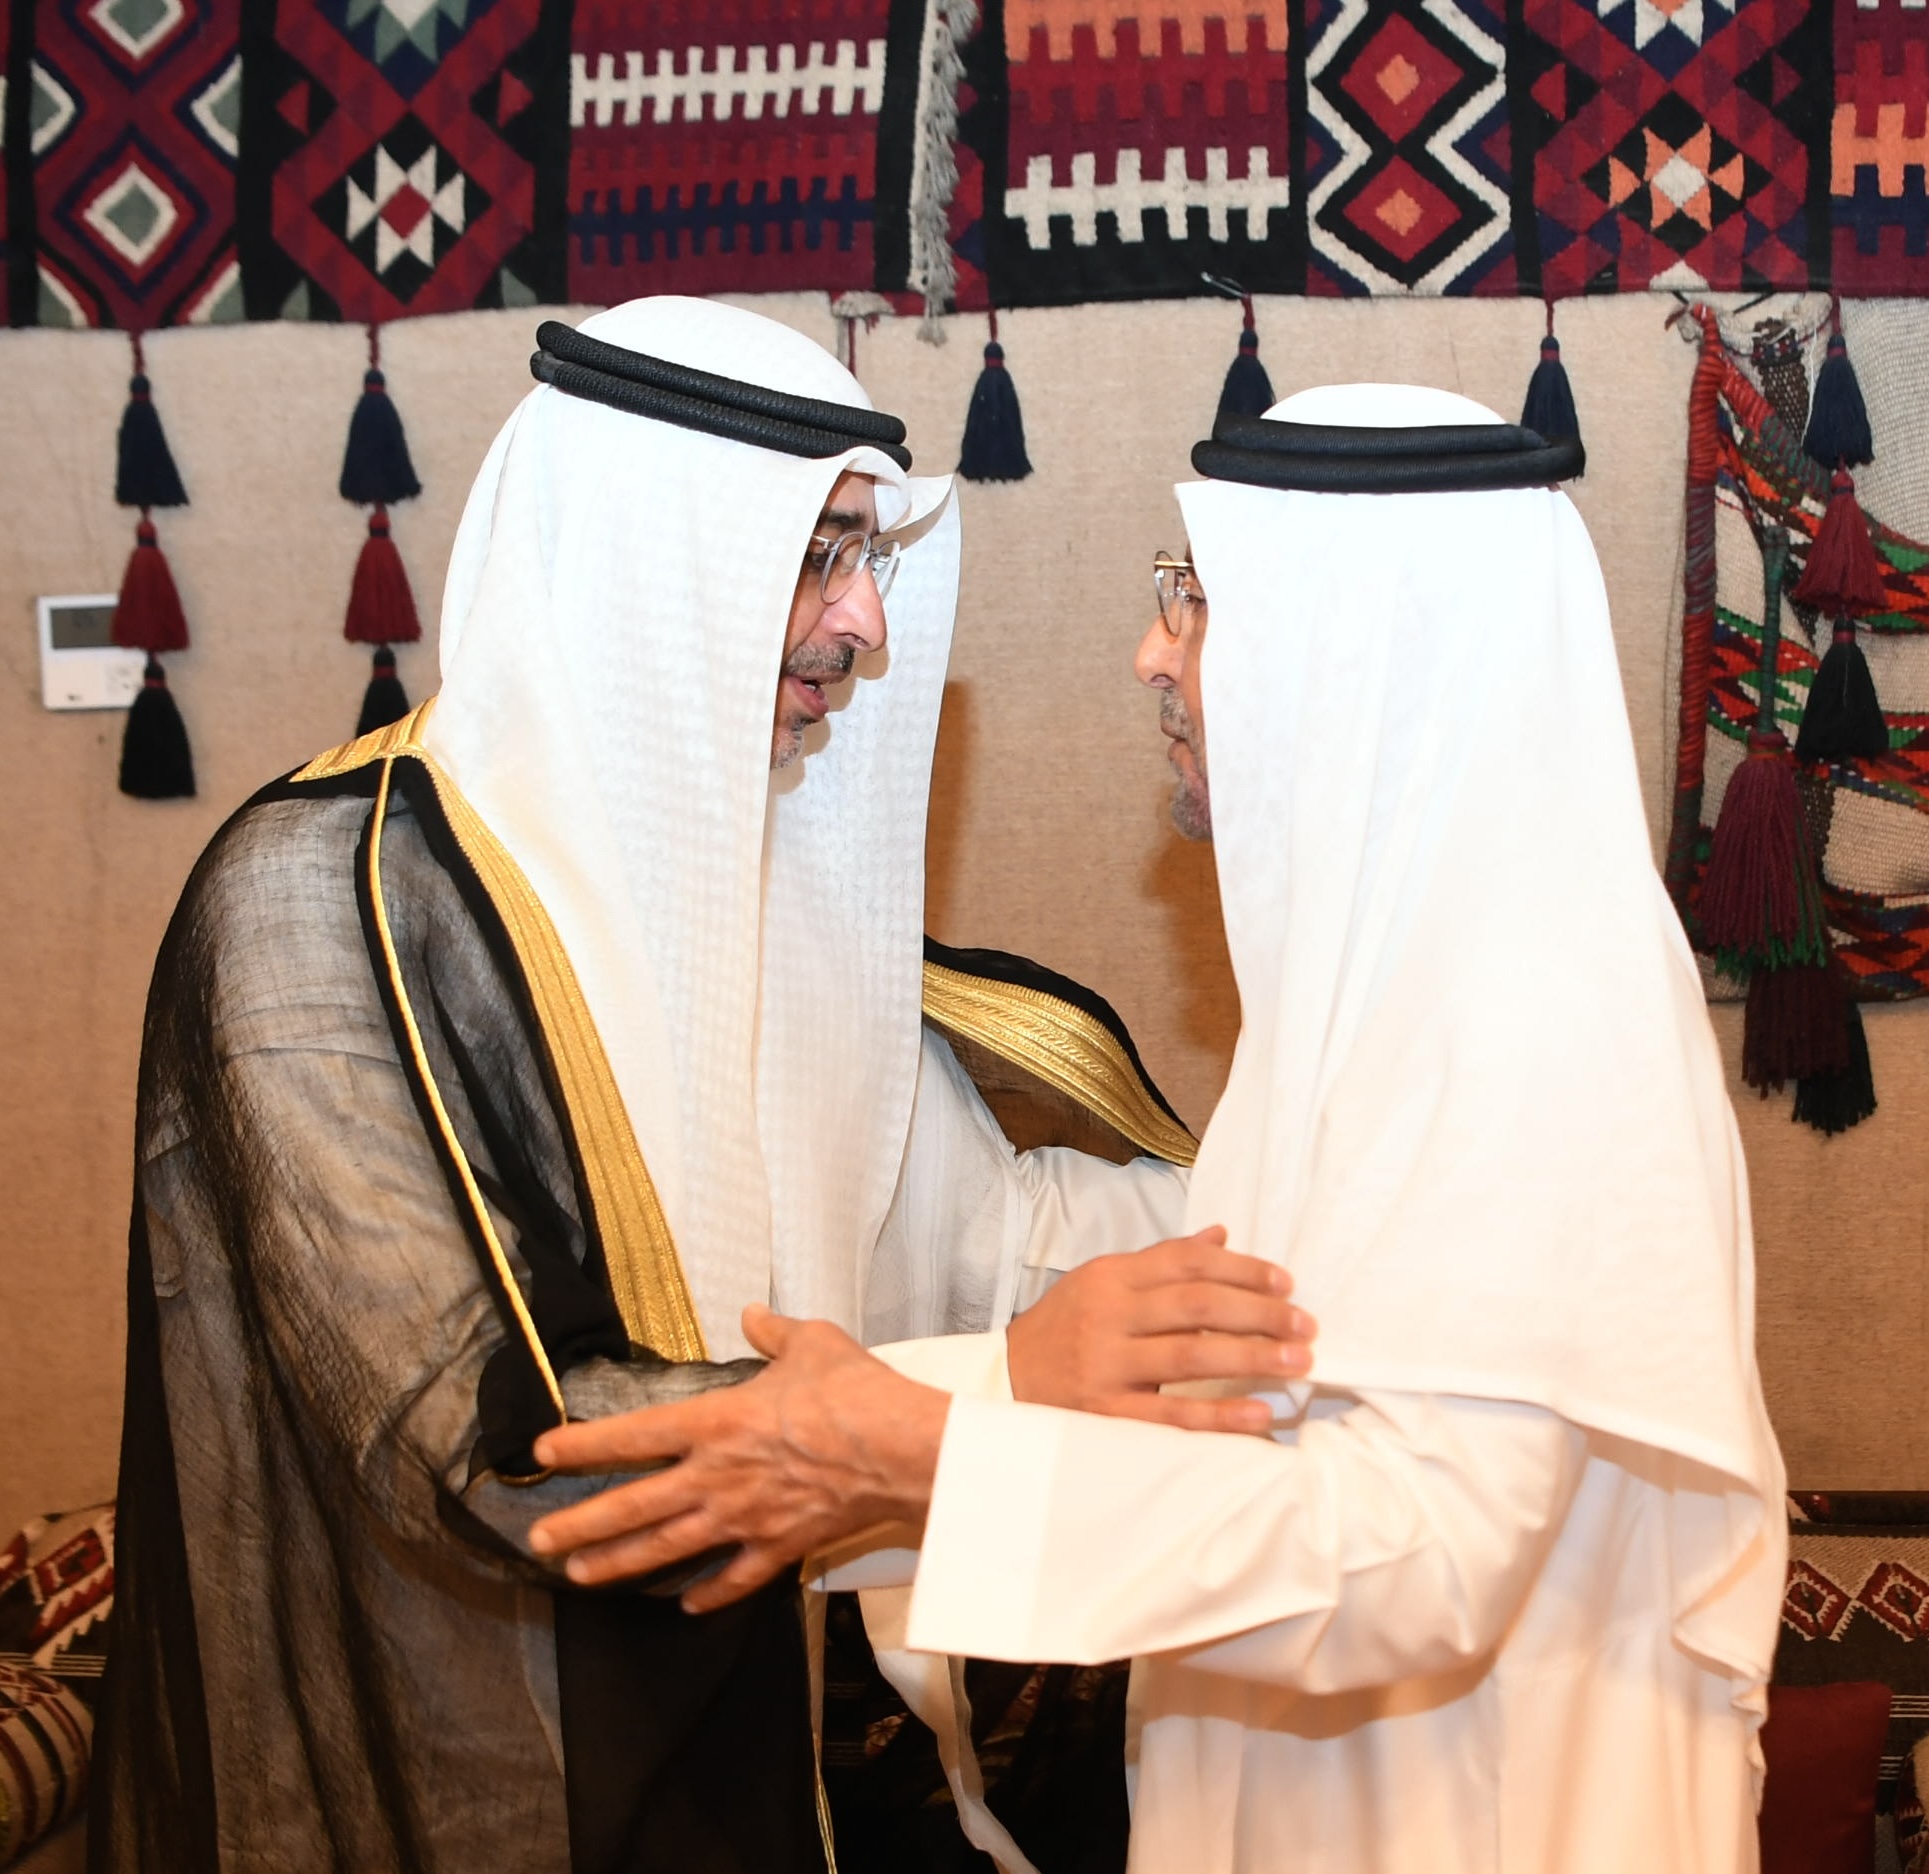 Kuwait Amir's Representative offers condolences on Saudi Prince demise